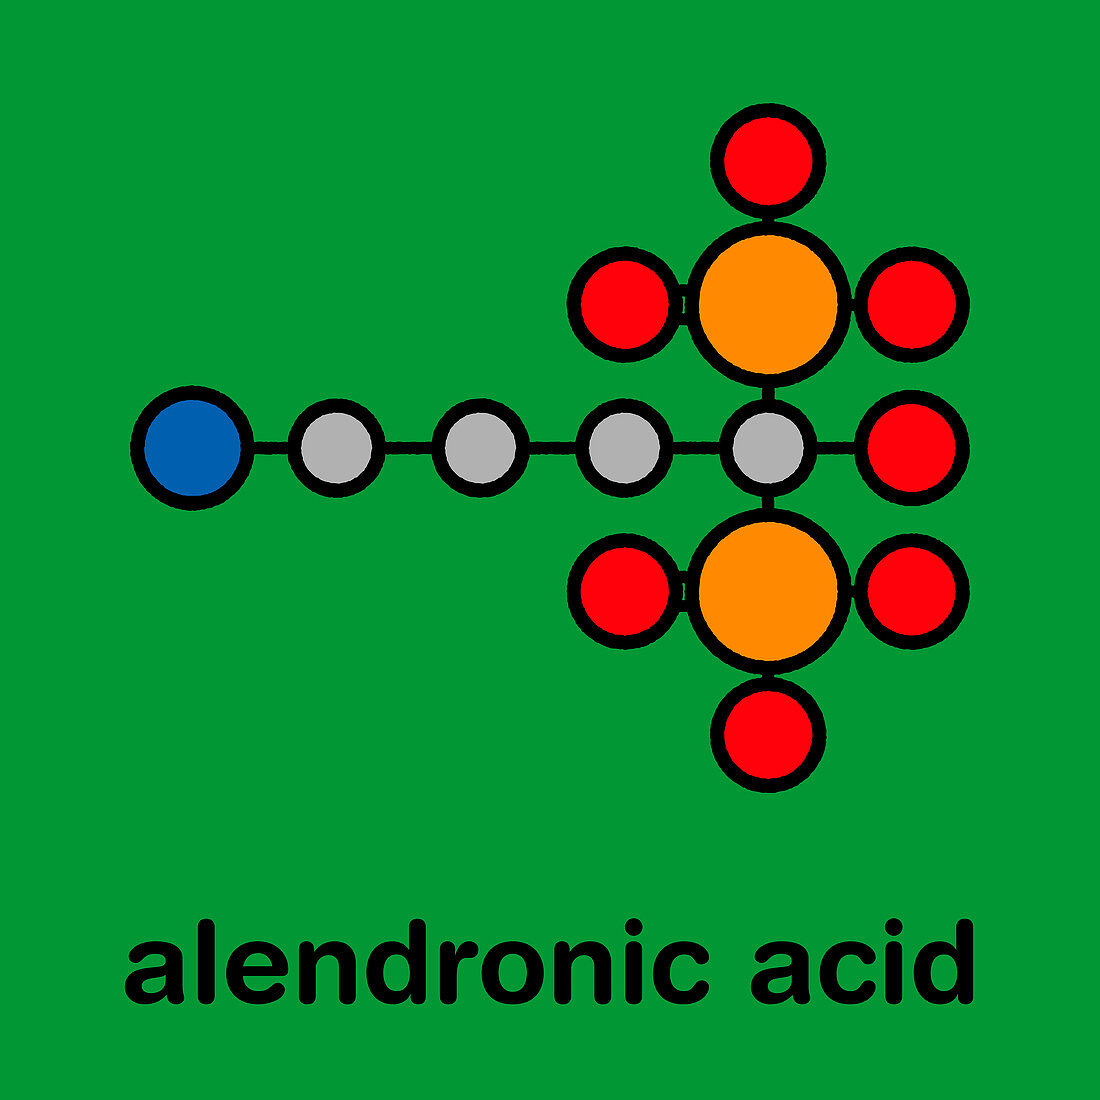 Alendronic acid osteoporosis drug, molecular model